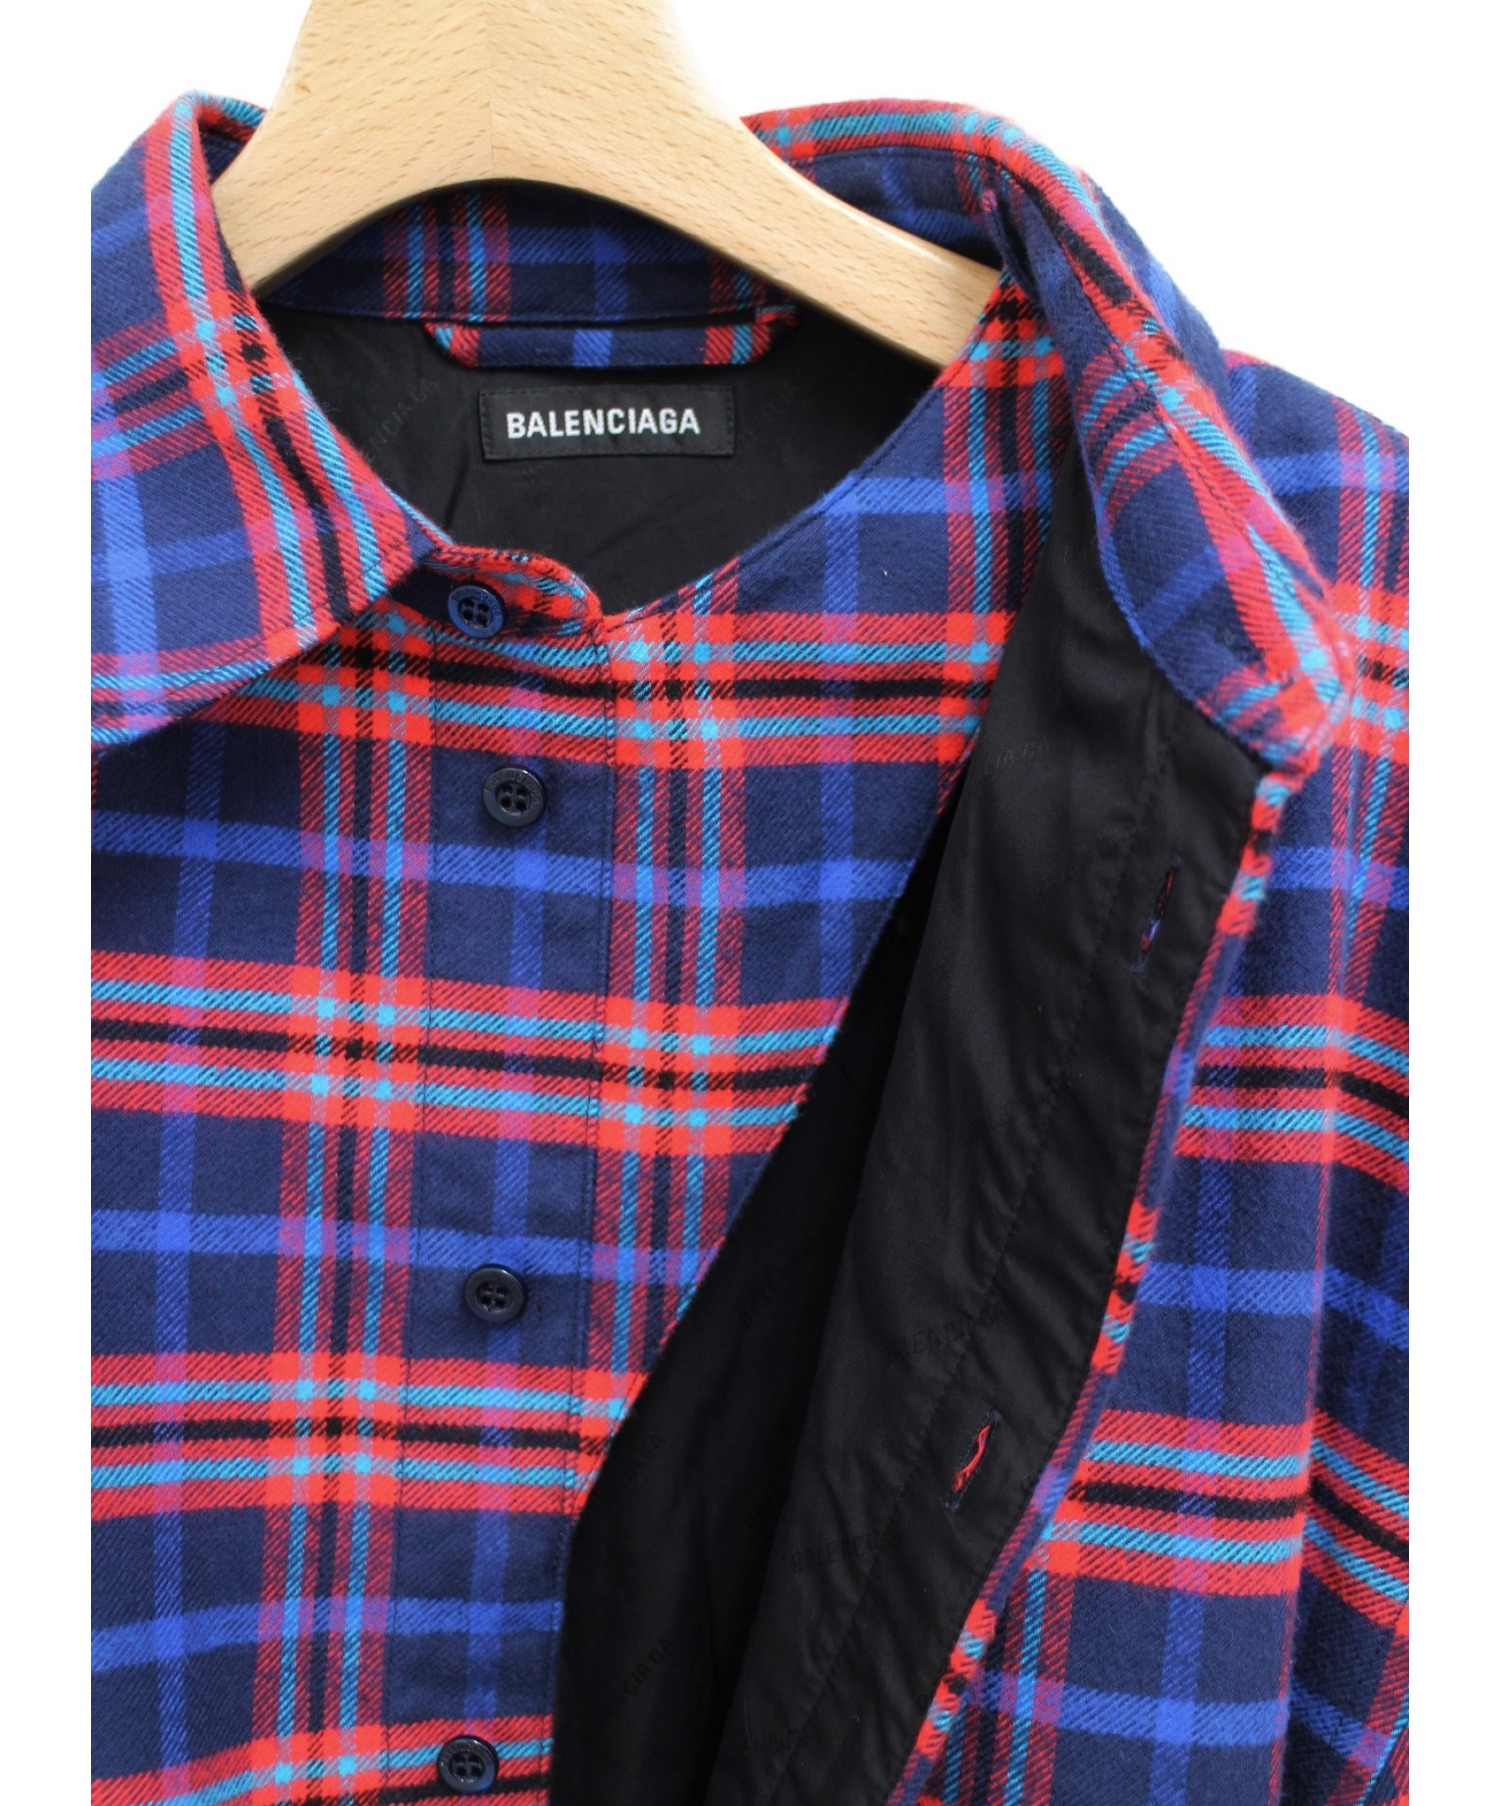 BALENCIAGA (バレンシアガ) 19AW オーバーサイズチェックシャツ ブルー×レッド サイズ:39